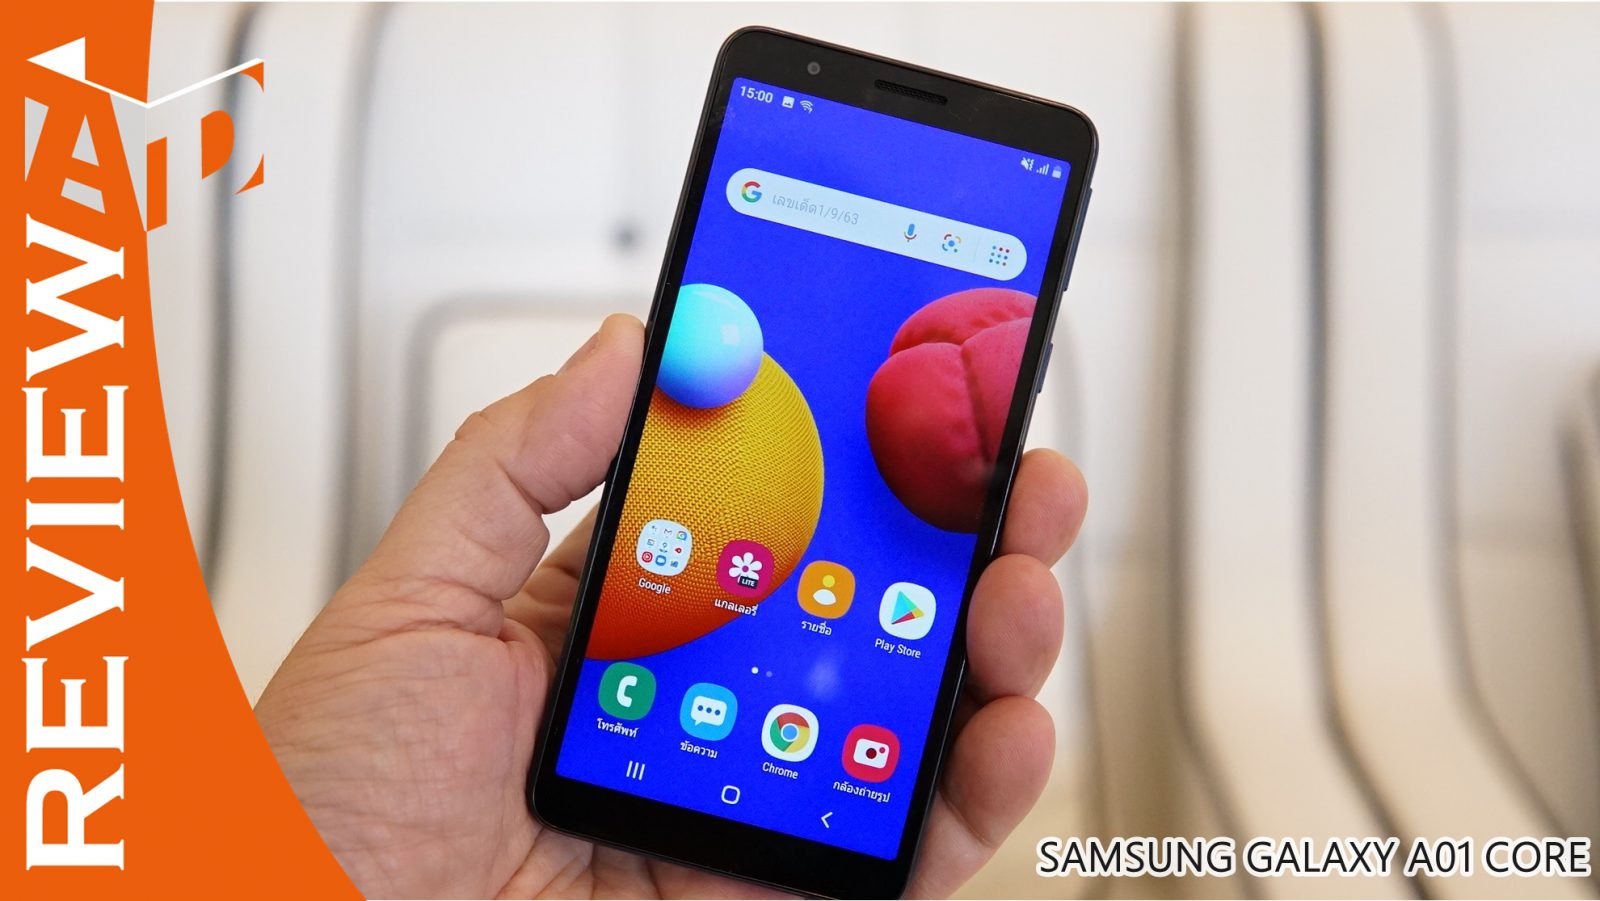 Samsung Galaxy A01 Core review | A01 Core | รีวิว Samsung Galaxy A01 Core ถูกสุดของซัมซุงกับสเปคเริ่มต้น เน้นอึดทน มาในระบบ Android GO